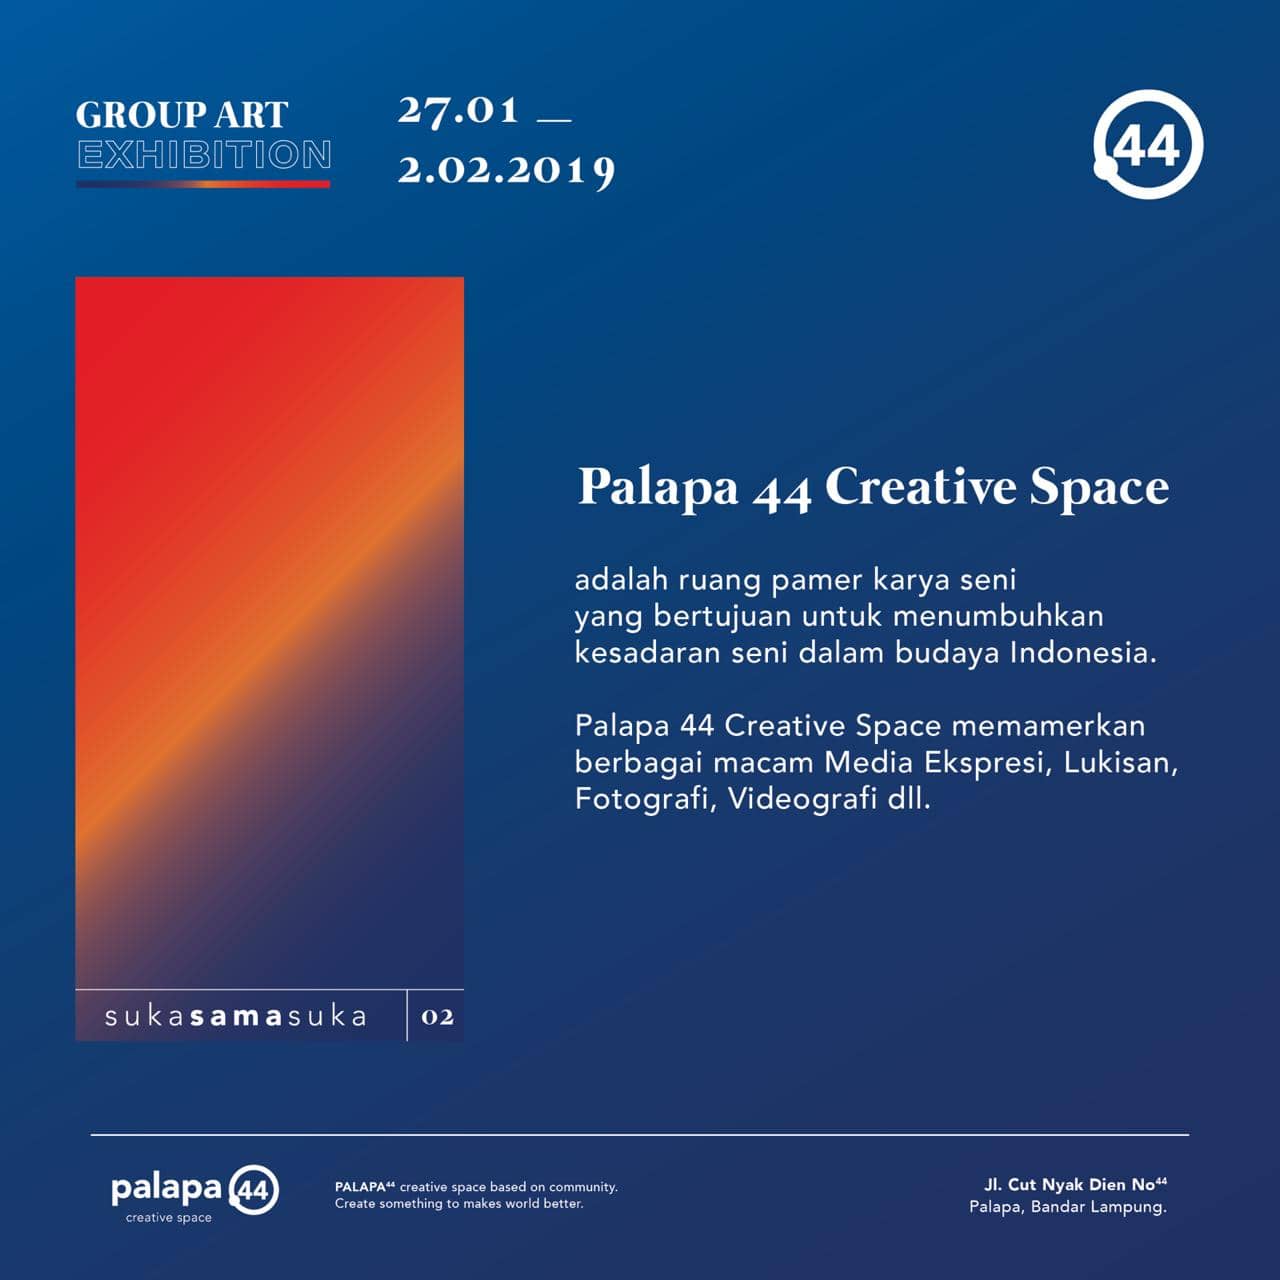 palapa44 3 [Events] Palapa44 - Suka Sama Suka 02 Group Exhibition